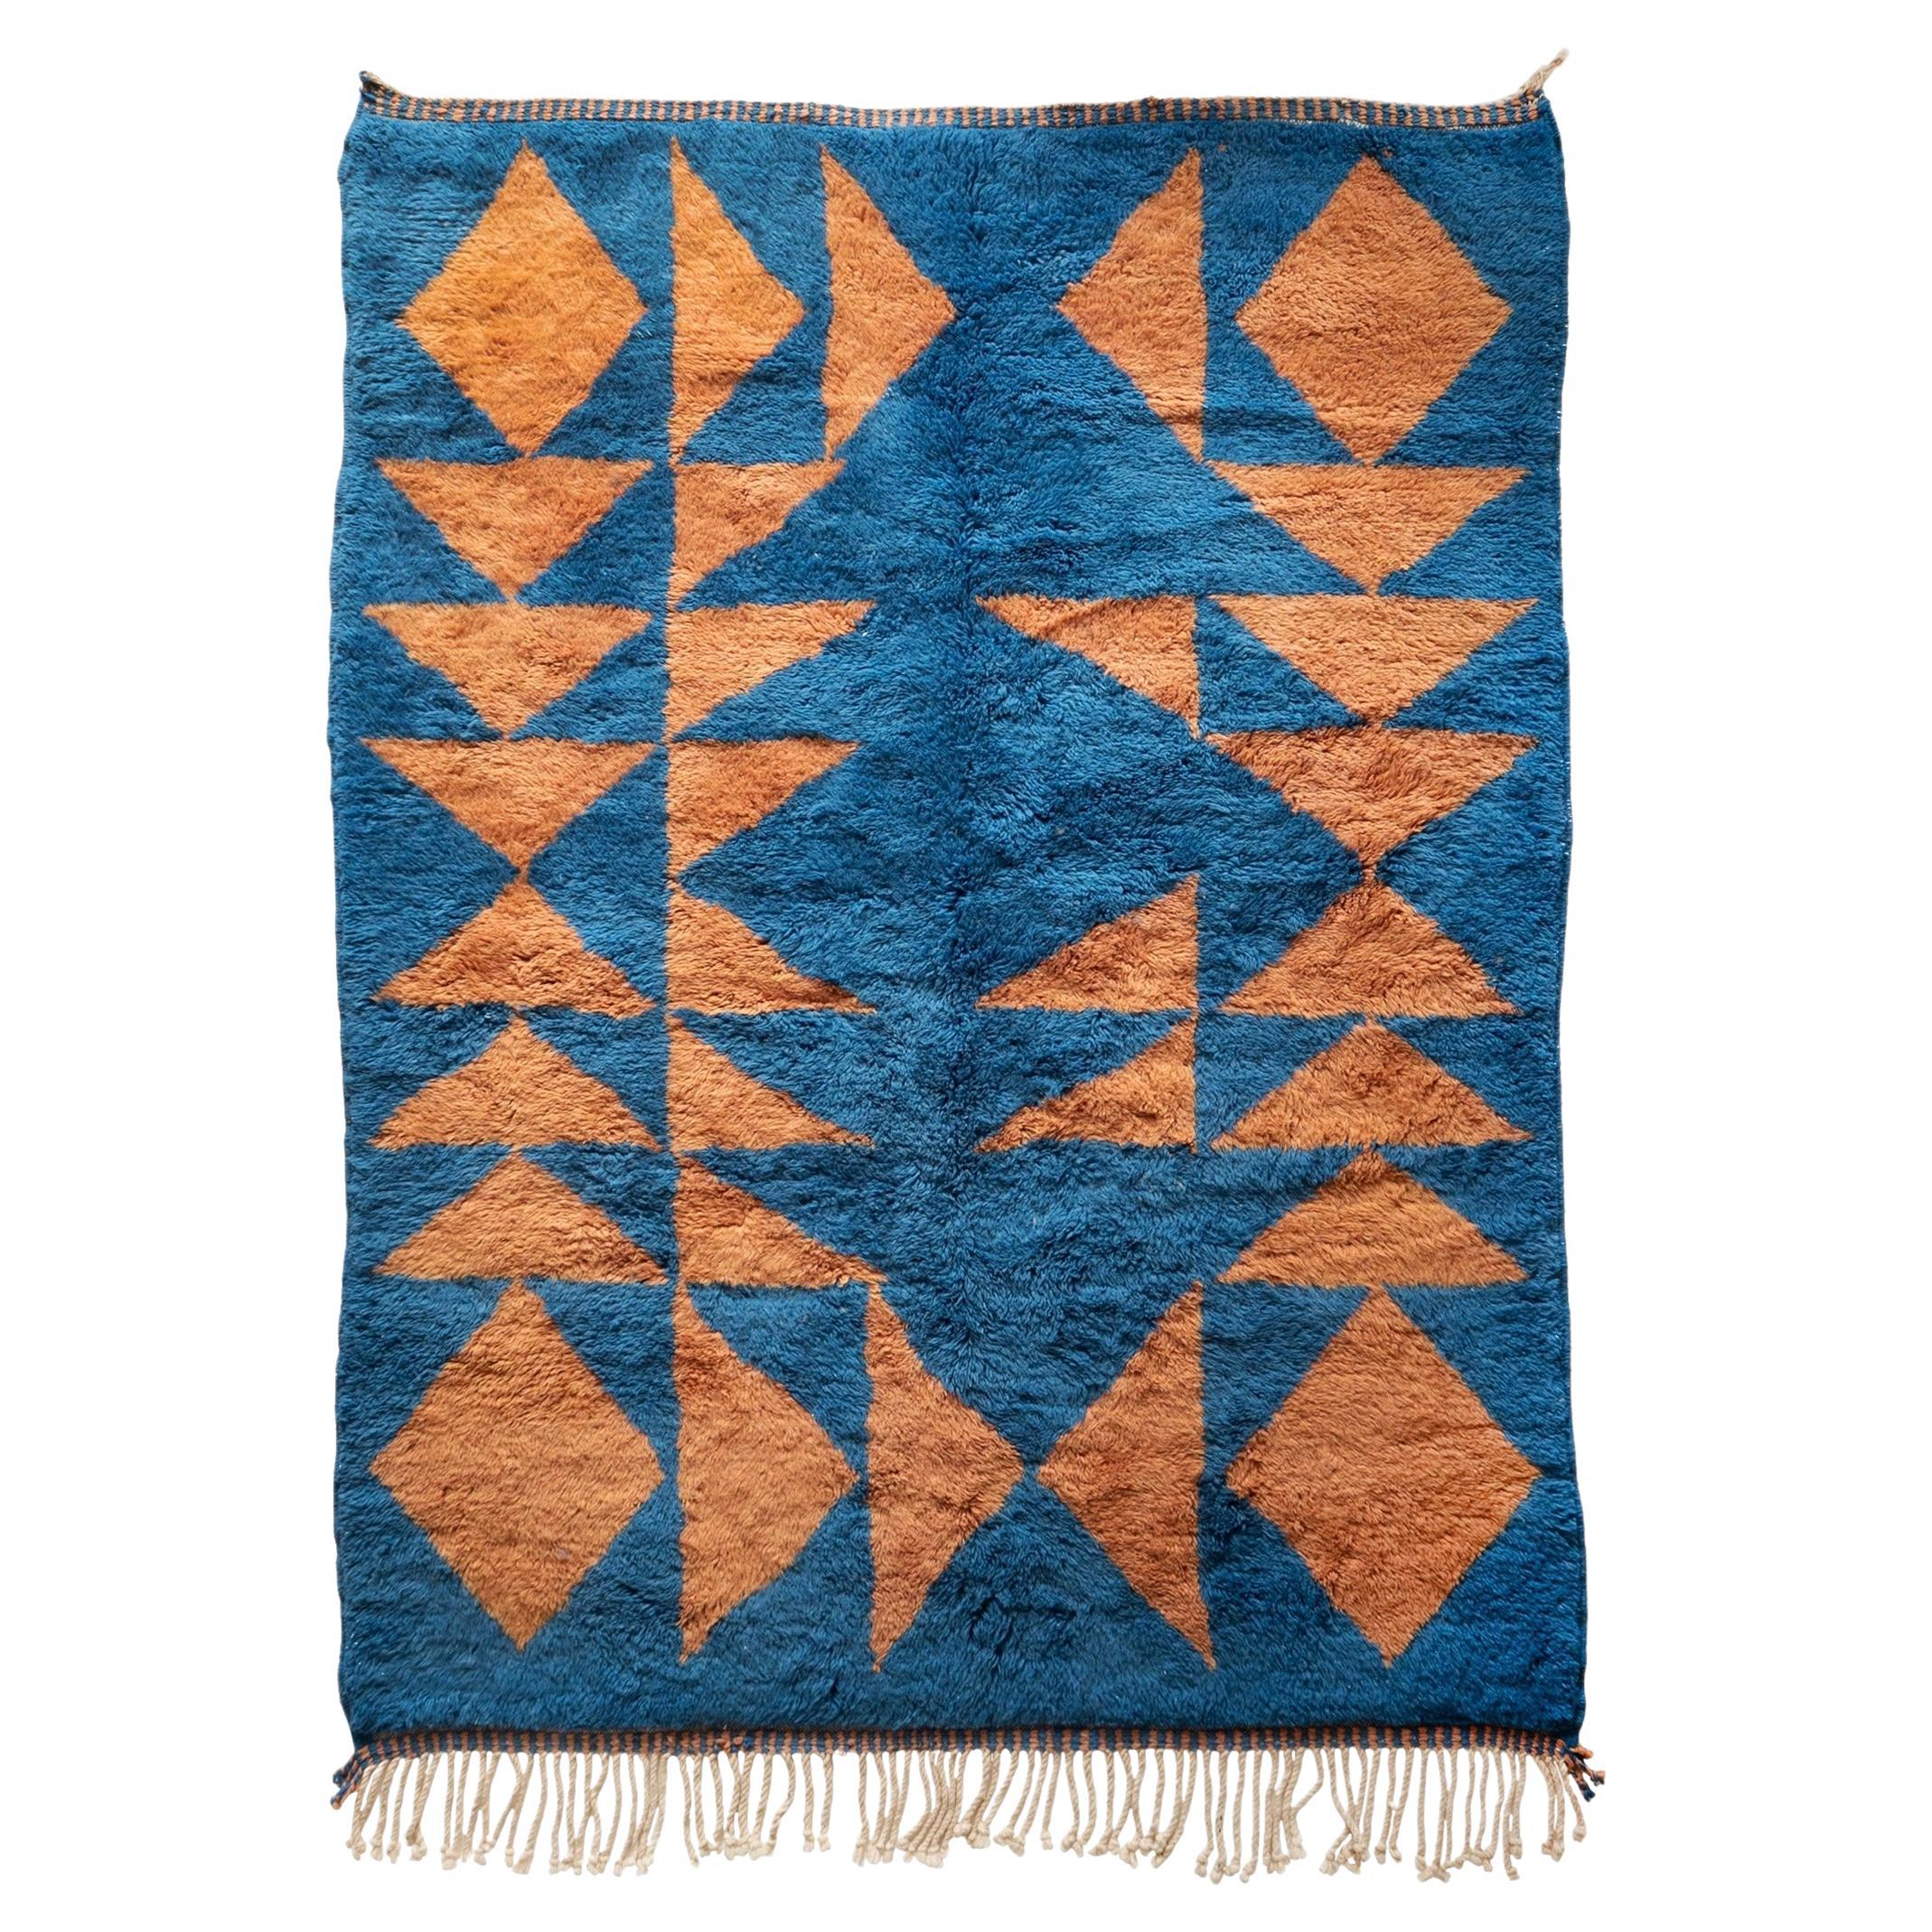 Tapis marocain Beni Mrirt, couleur bleu profond, motif triangulaire bigarré, en stock